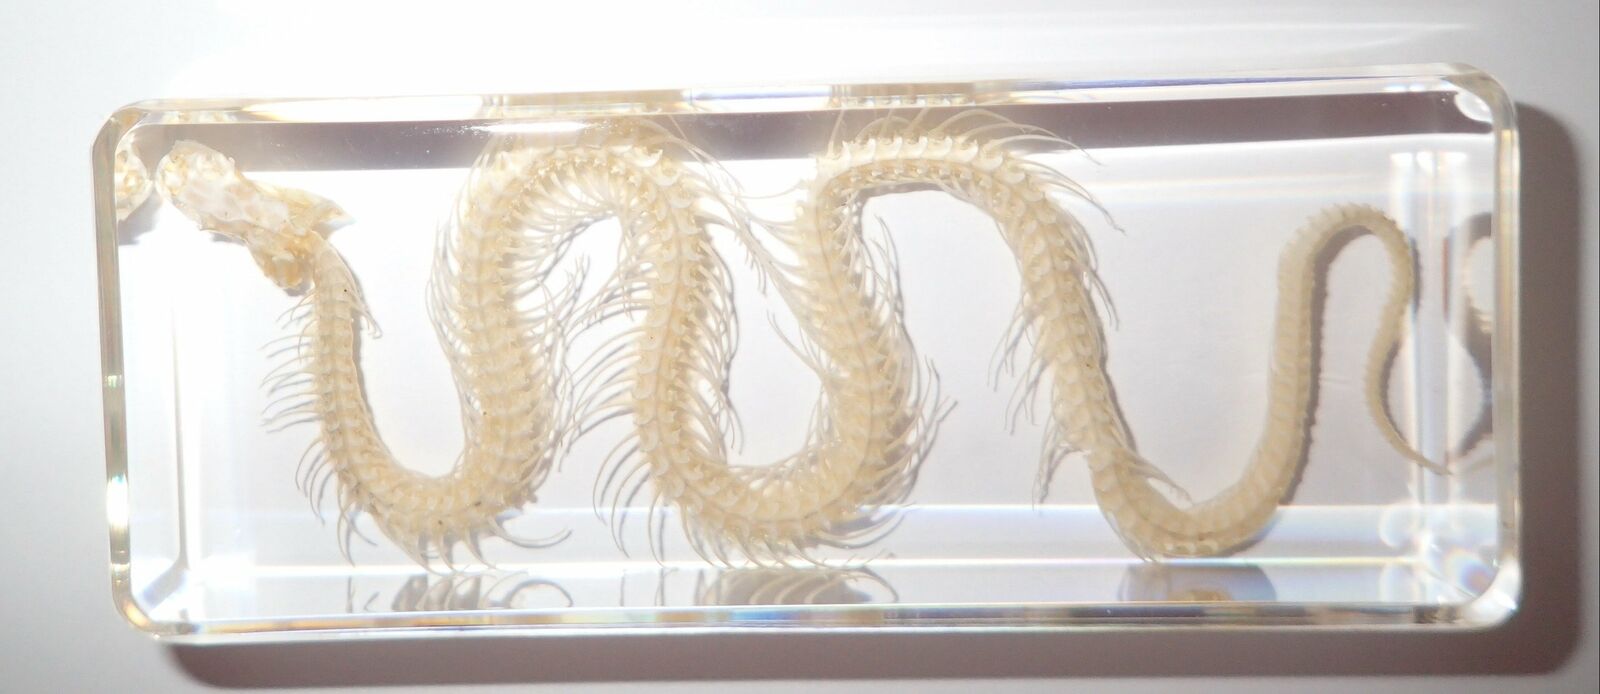 Chinese Water Snake Skeleton in 110x45x18 mm Block Education Animal Specimen